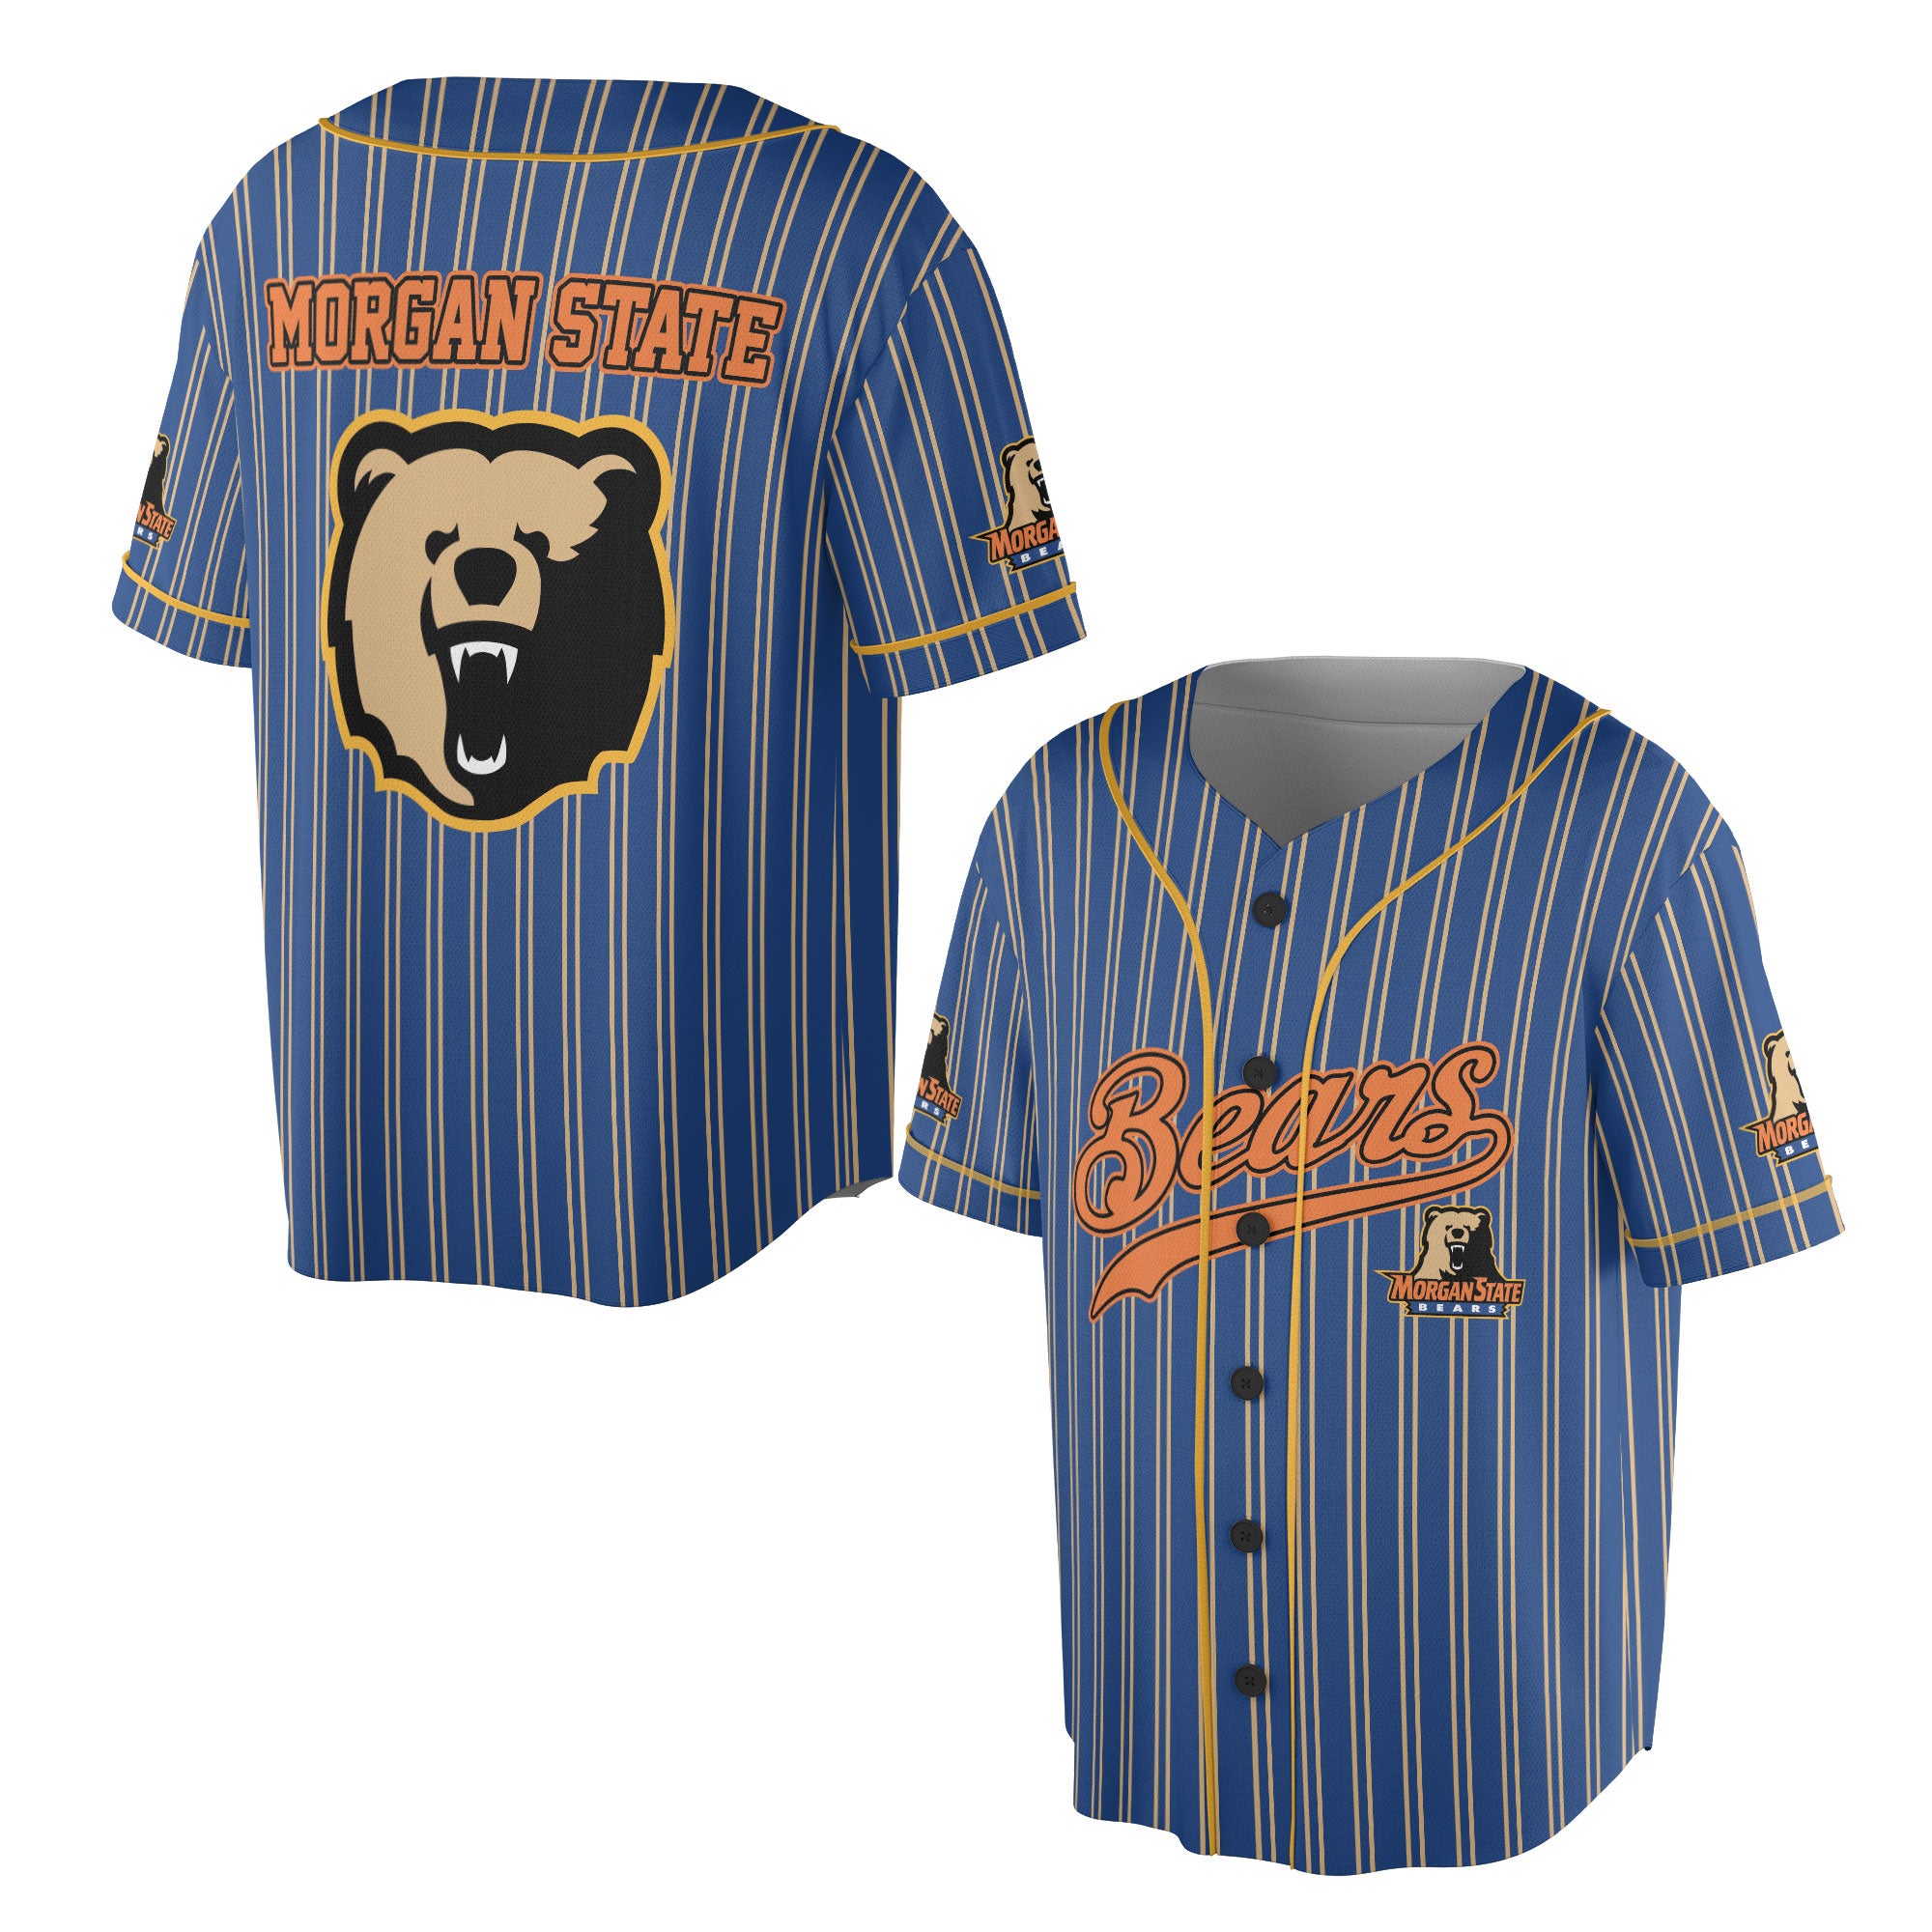 Morgan State Bears Baseball Jersey All-Over-Print